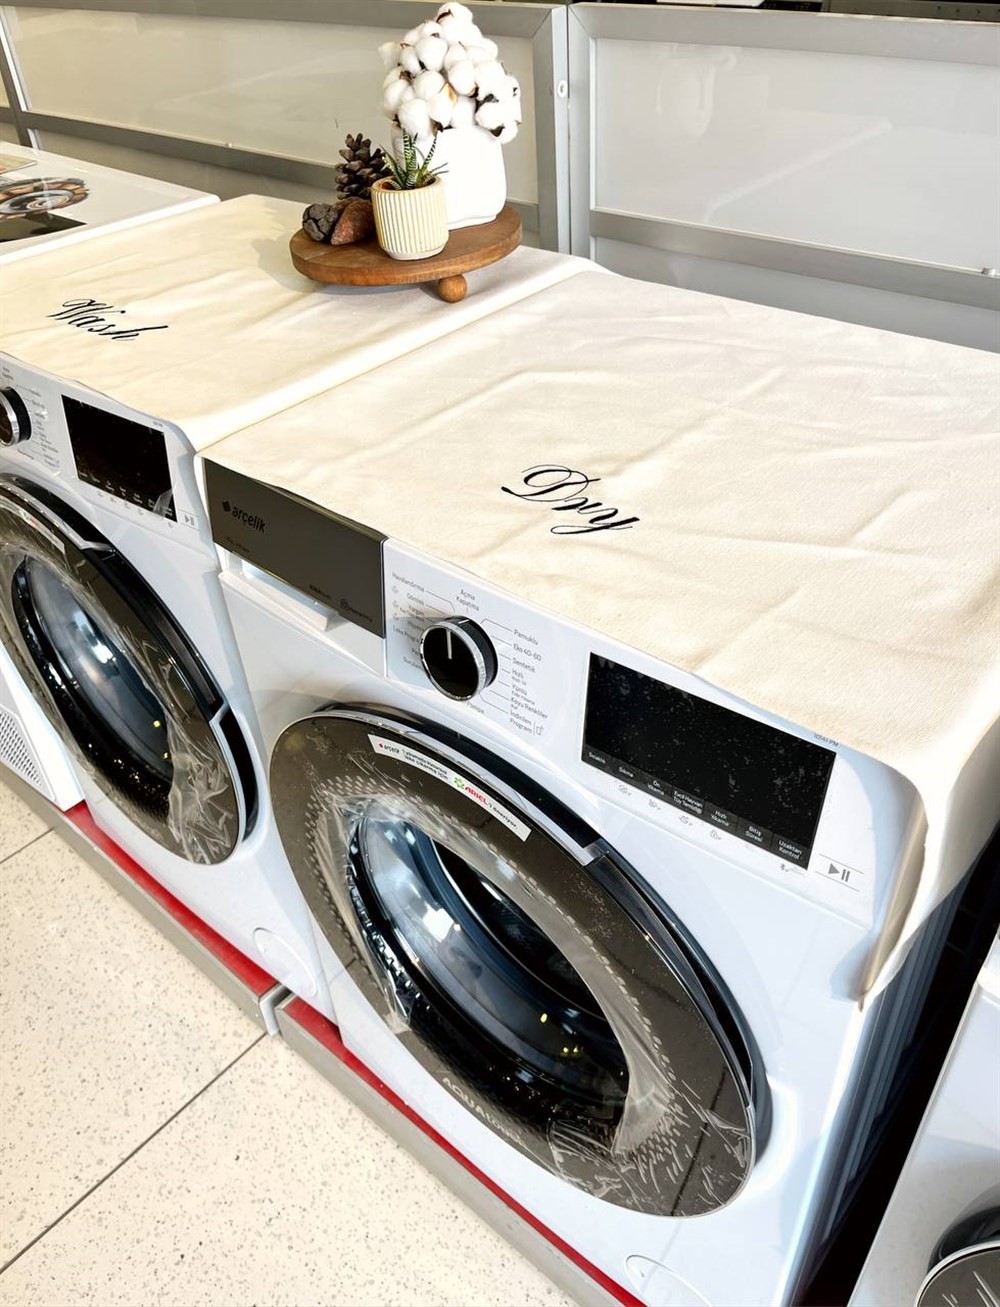 Atölye No 35 Wash Çamaşır Makinesi Örtüsü & Dry Çamaşır Kurutma Makinesi Örtüsü 2'li Set Krem